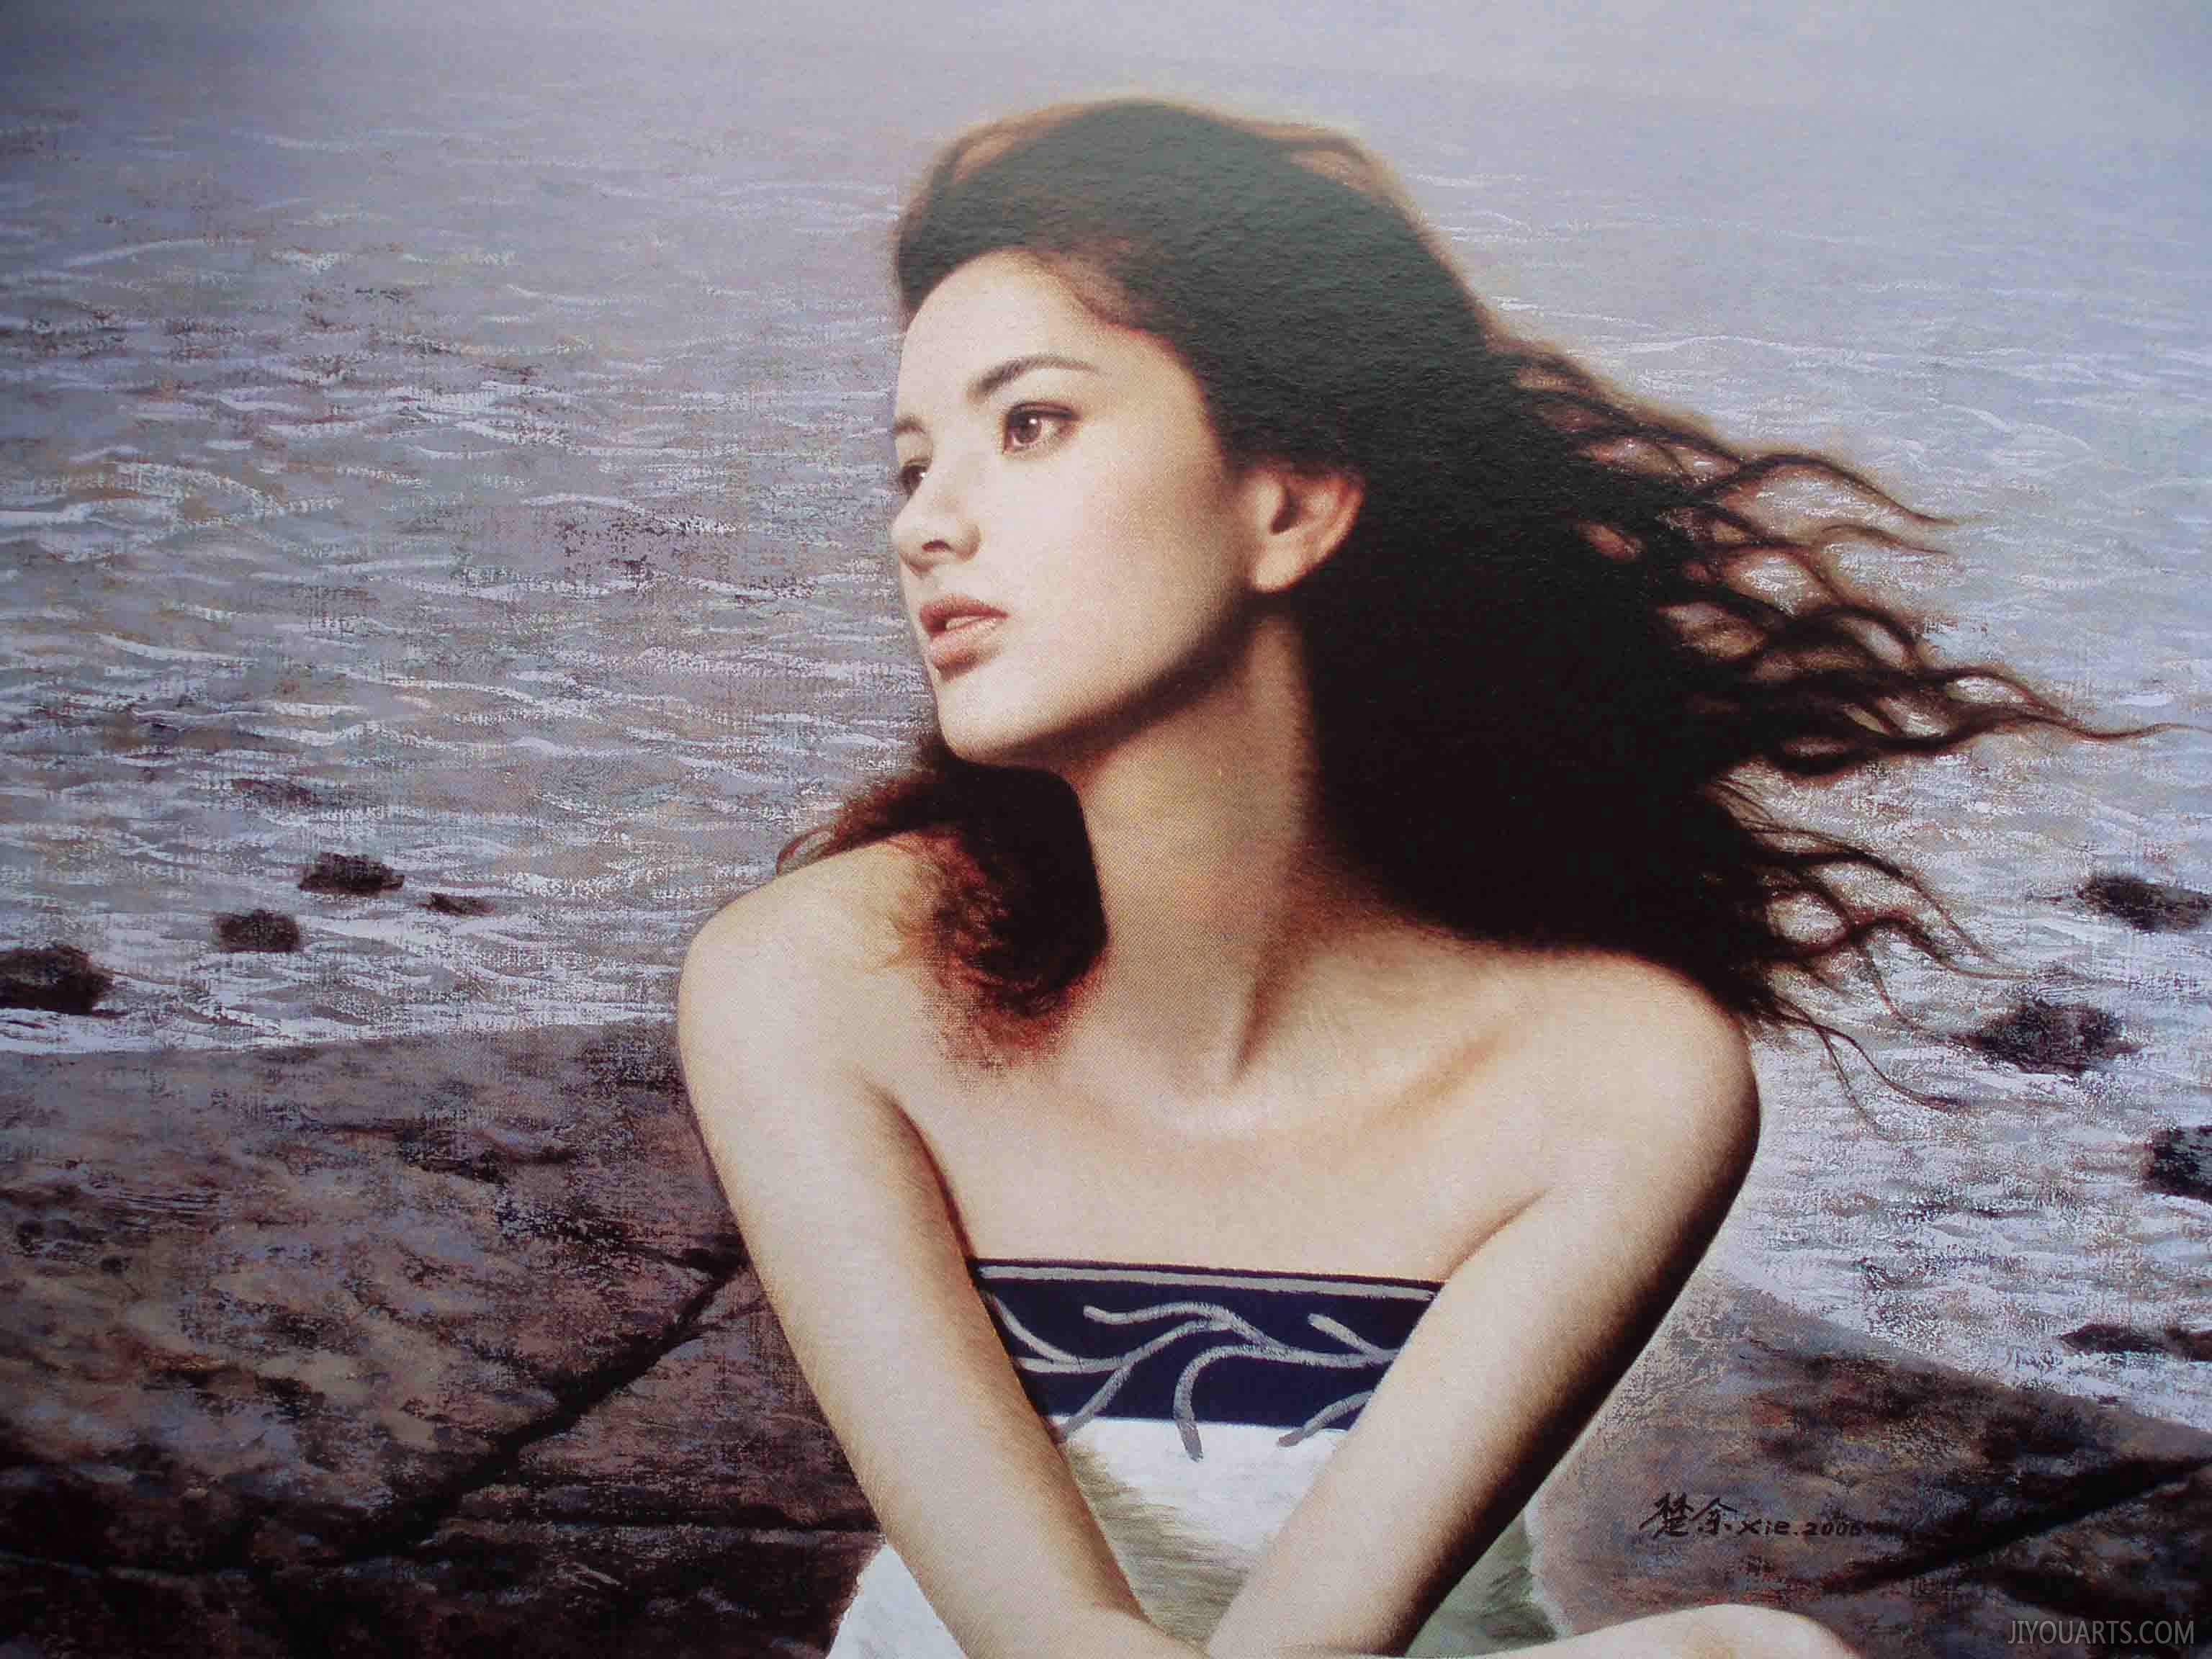 Modern girl by the sea